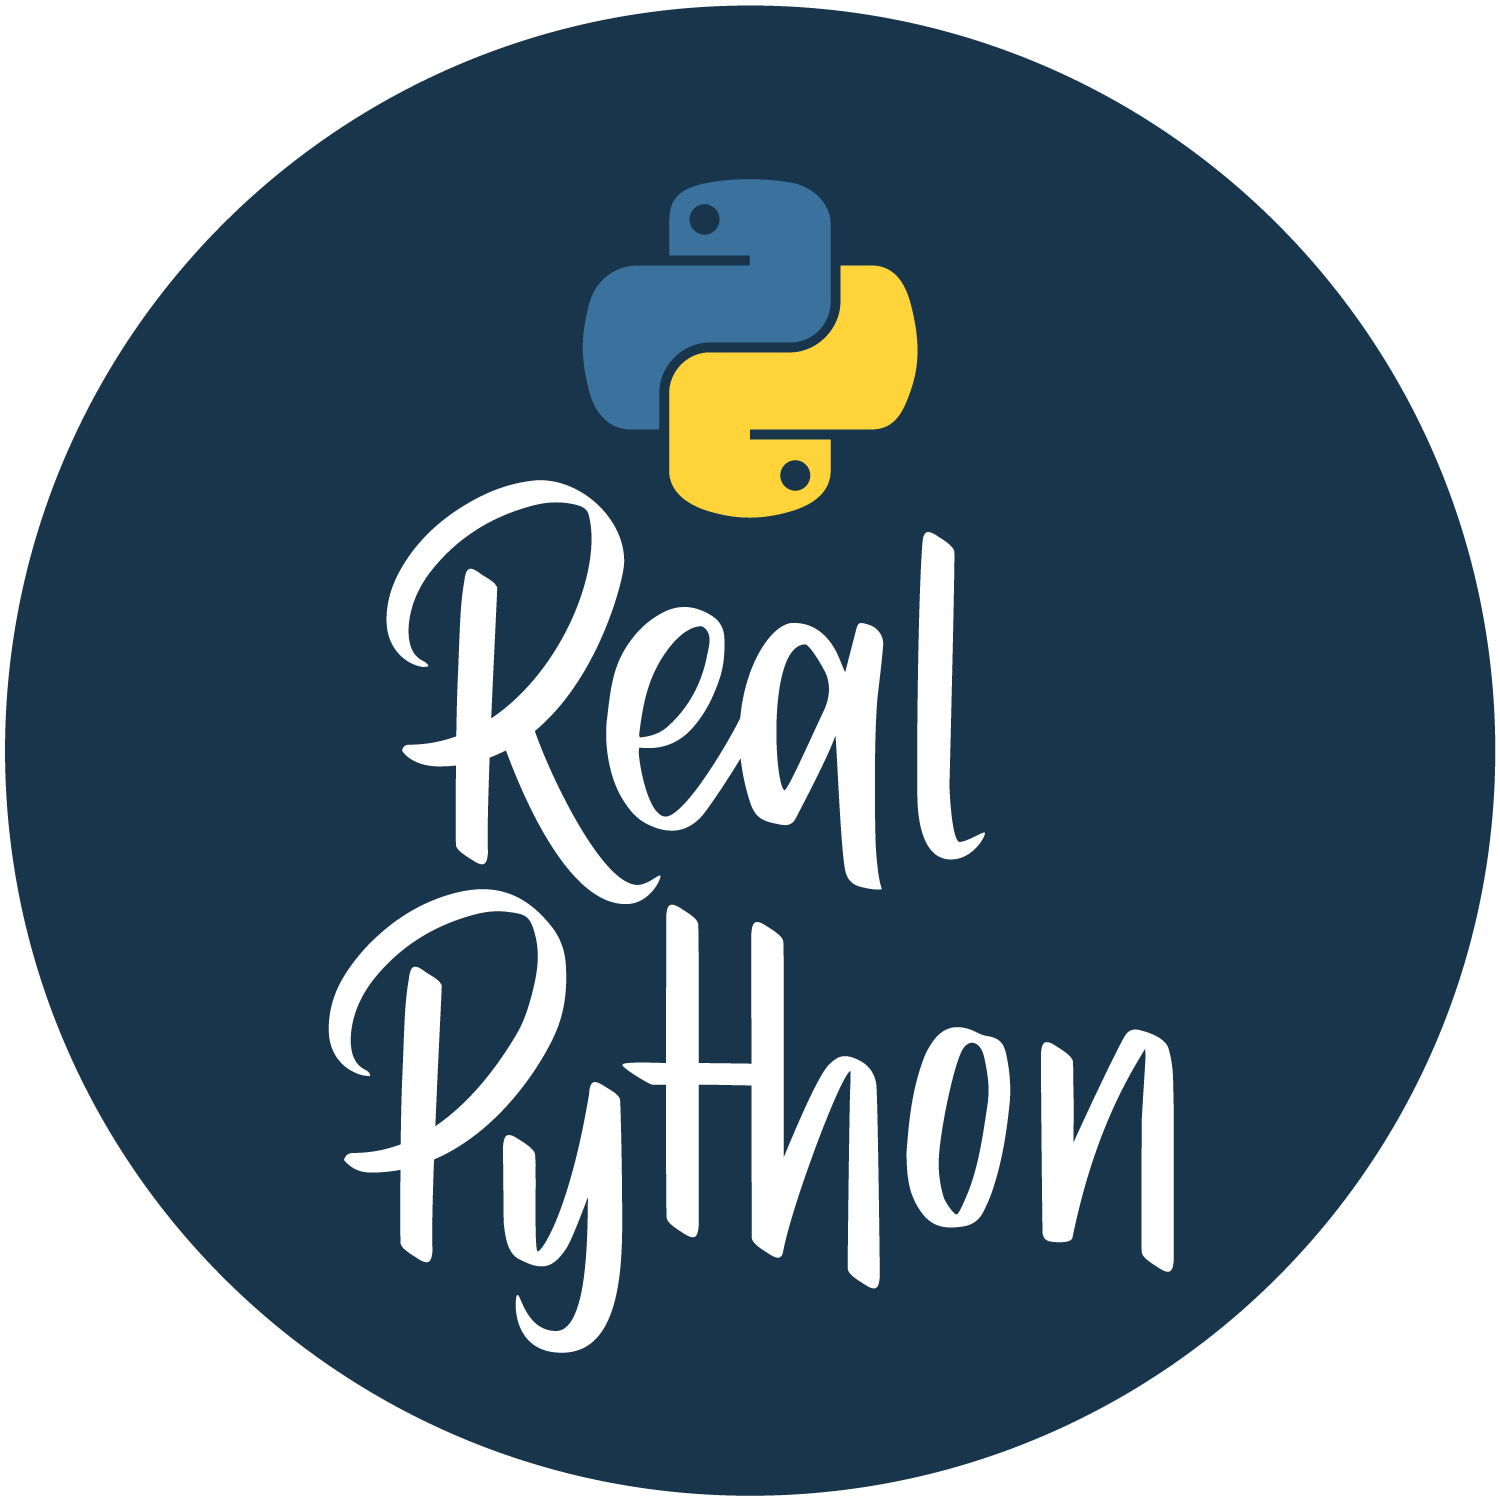 Get Practical Python Programming Skills